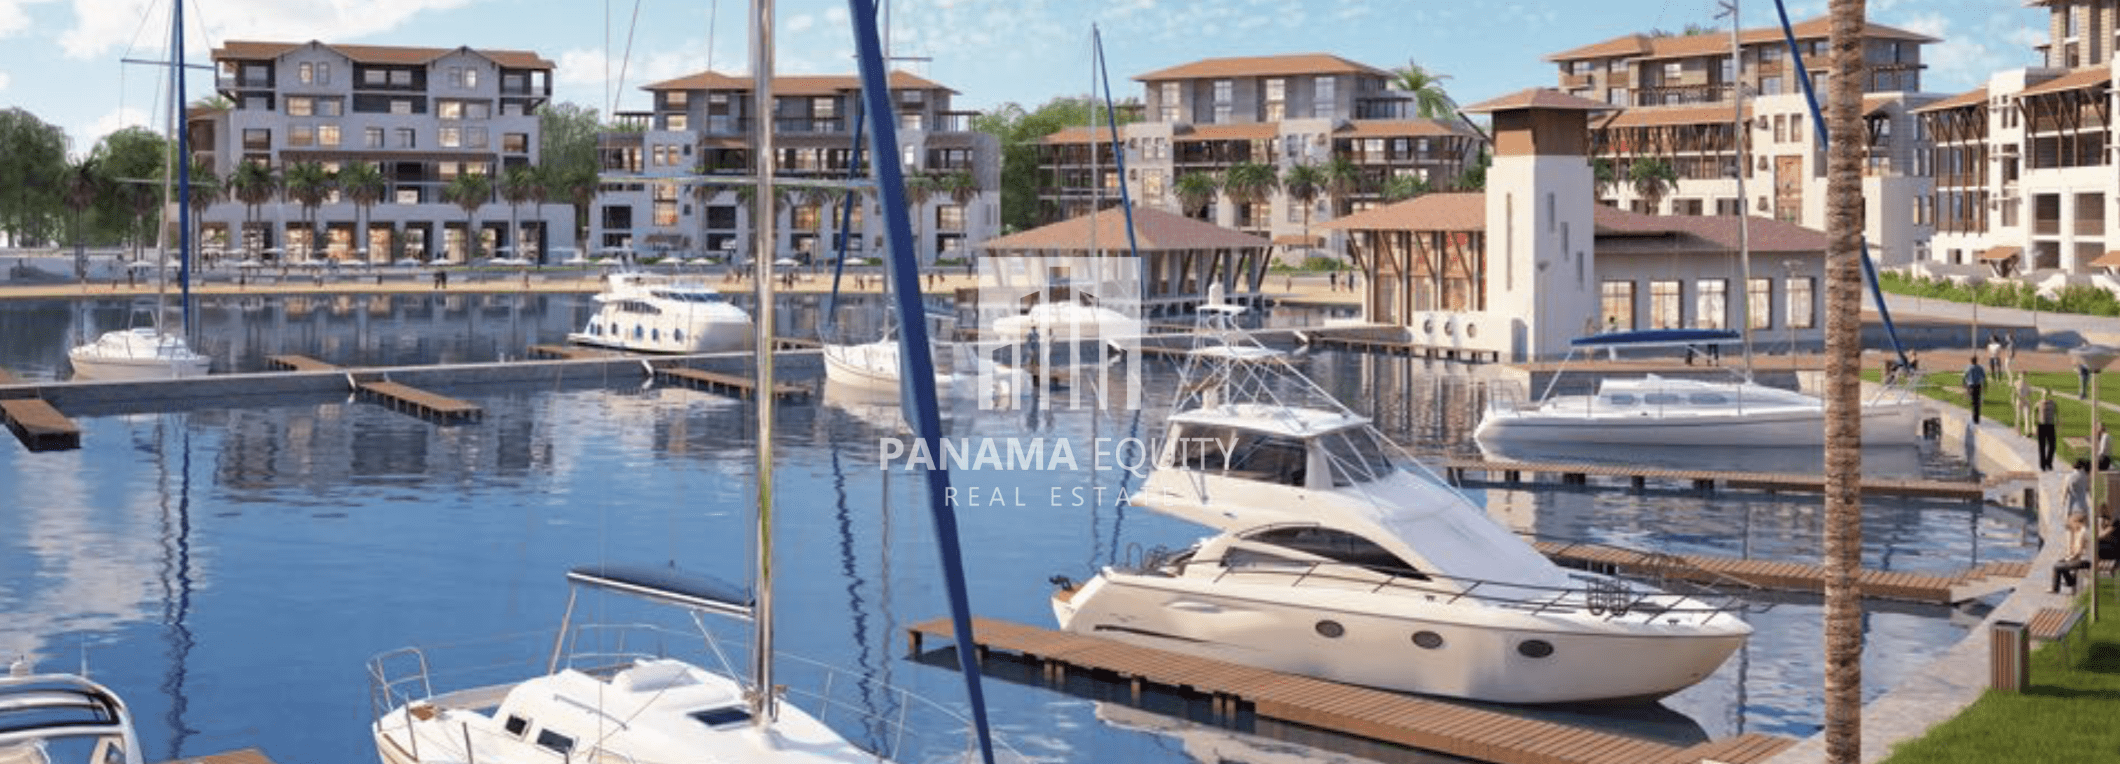 yachts-in-dock-coronado-panama